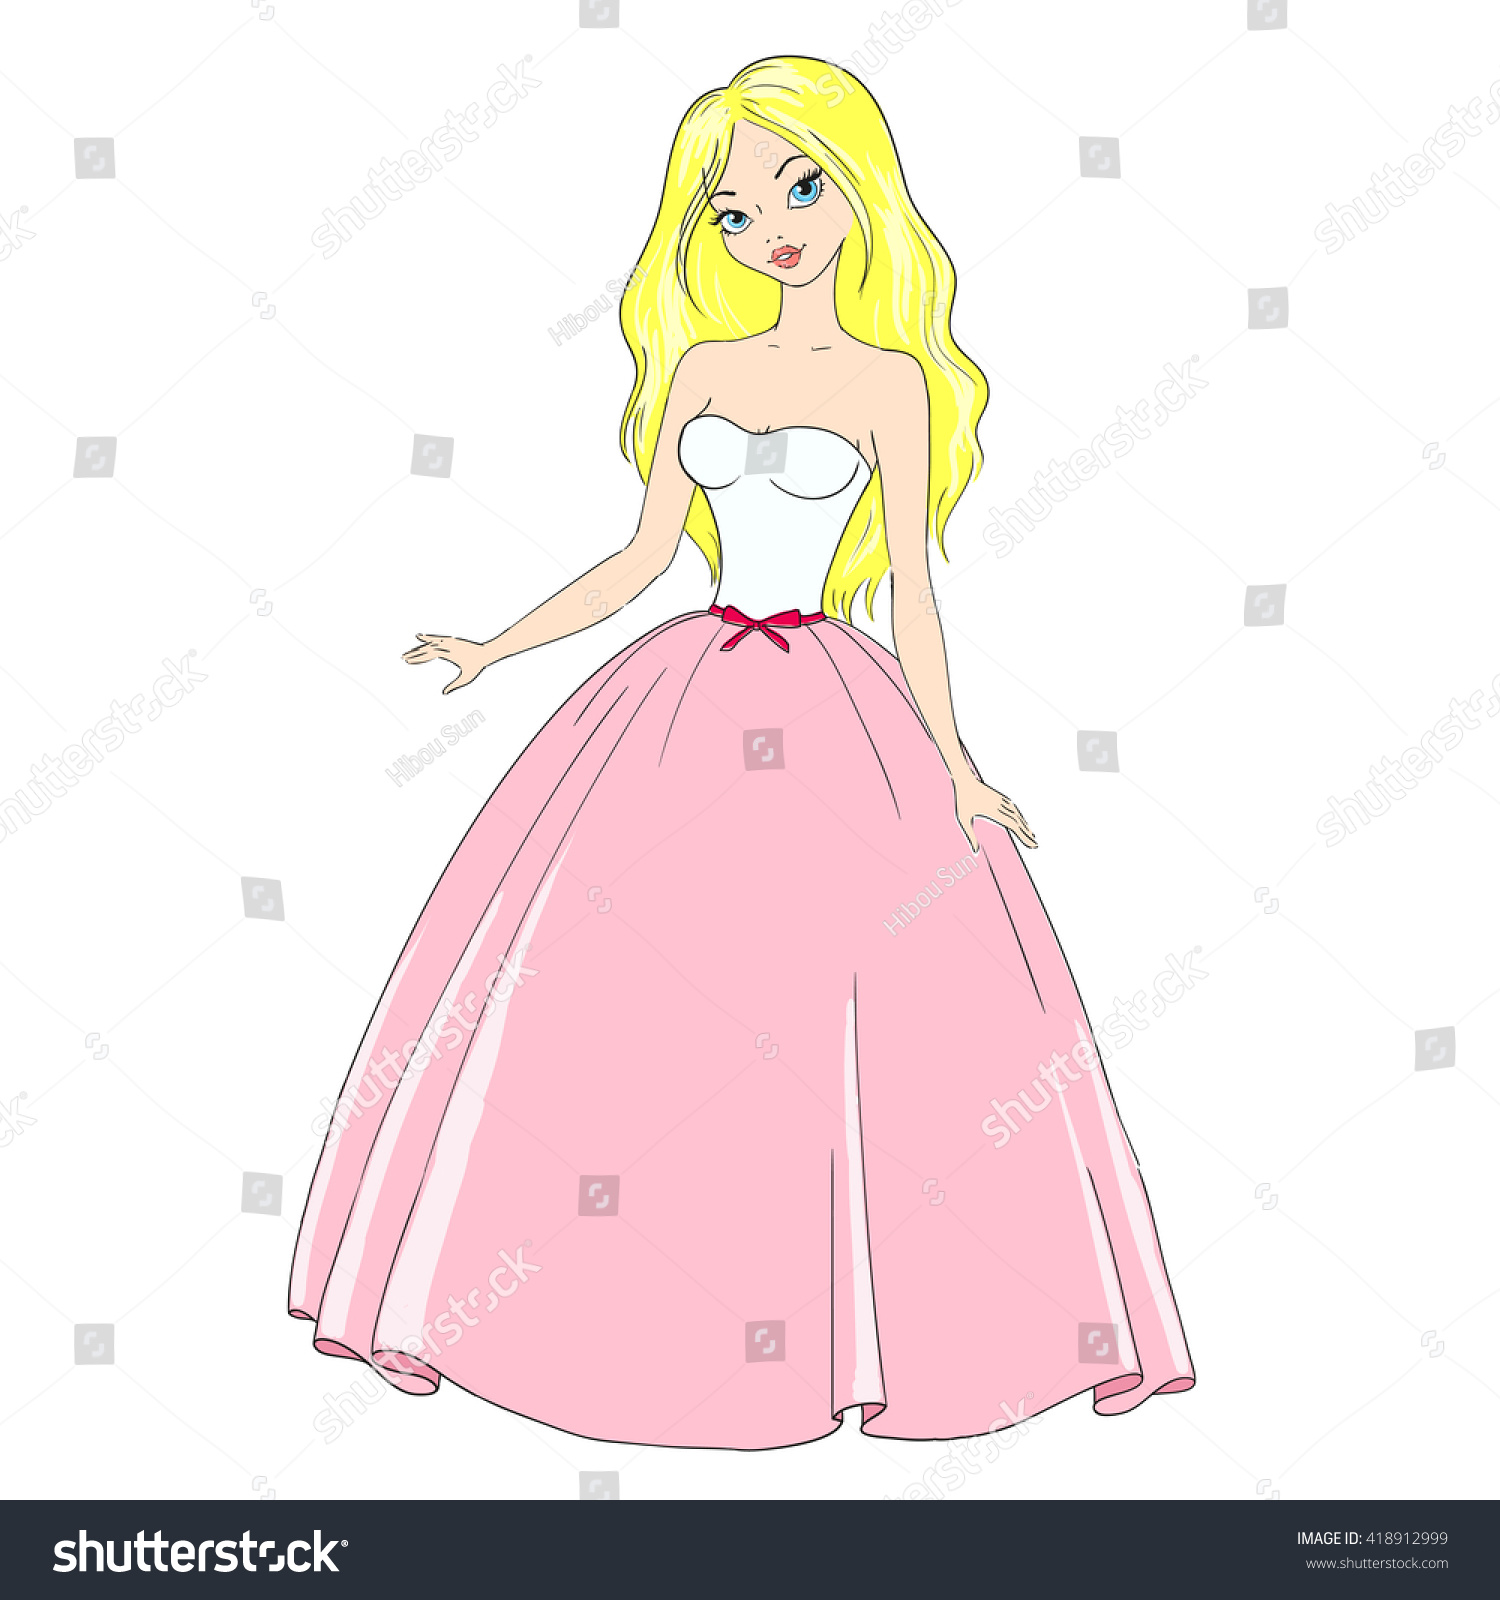 pretty girl in dress cartoon